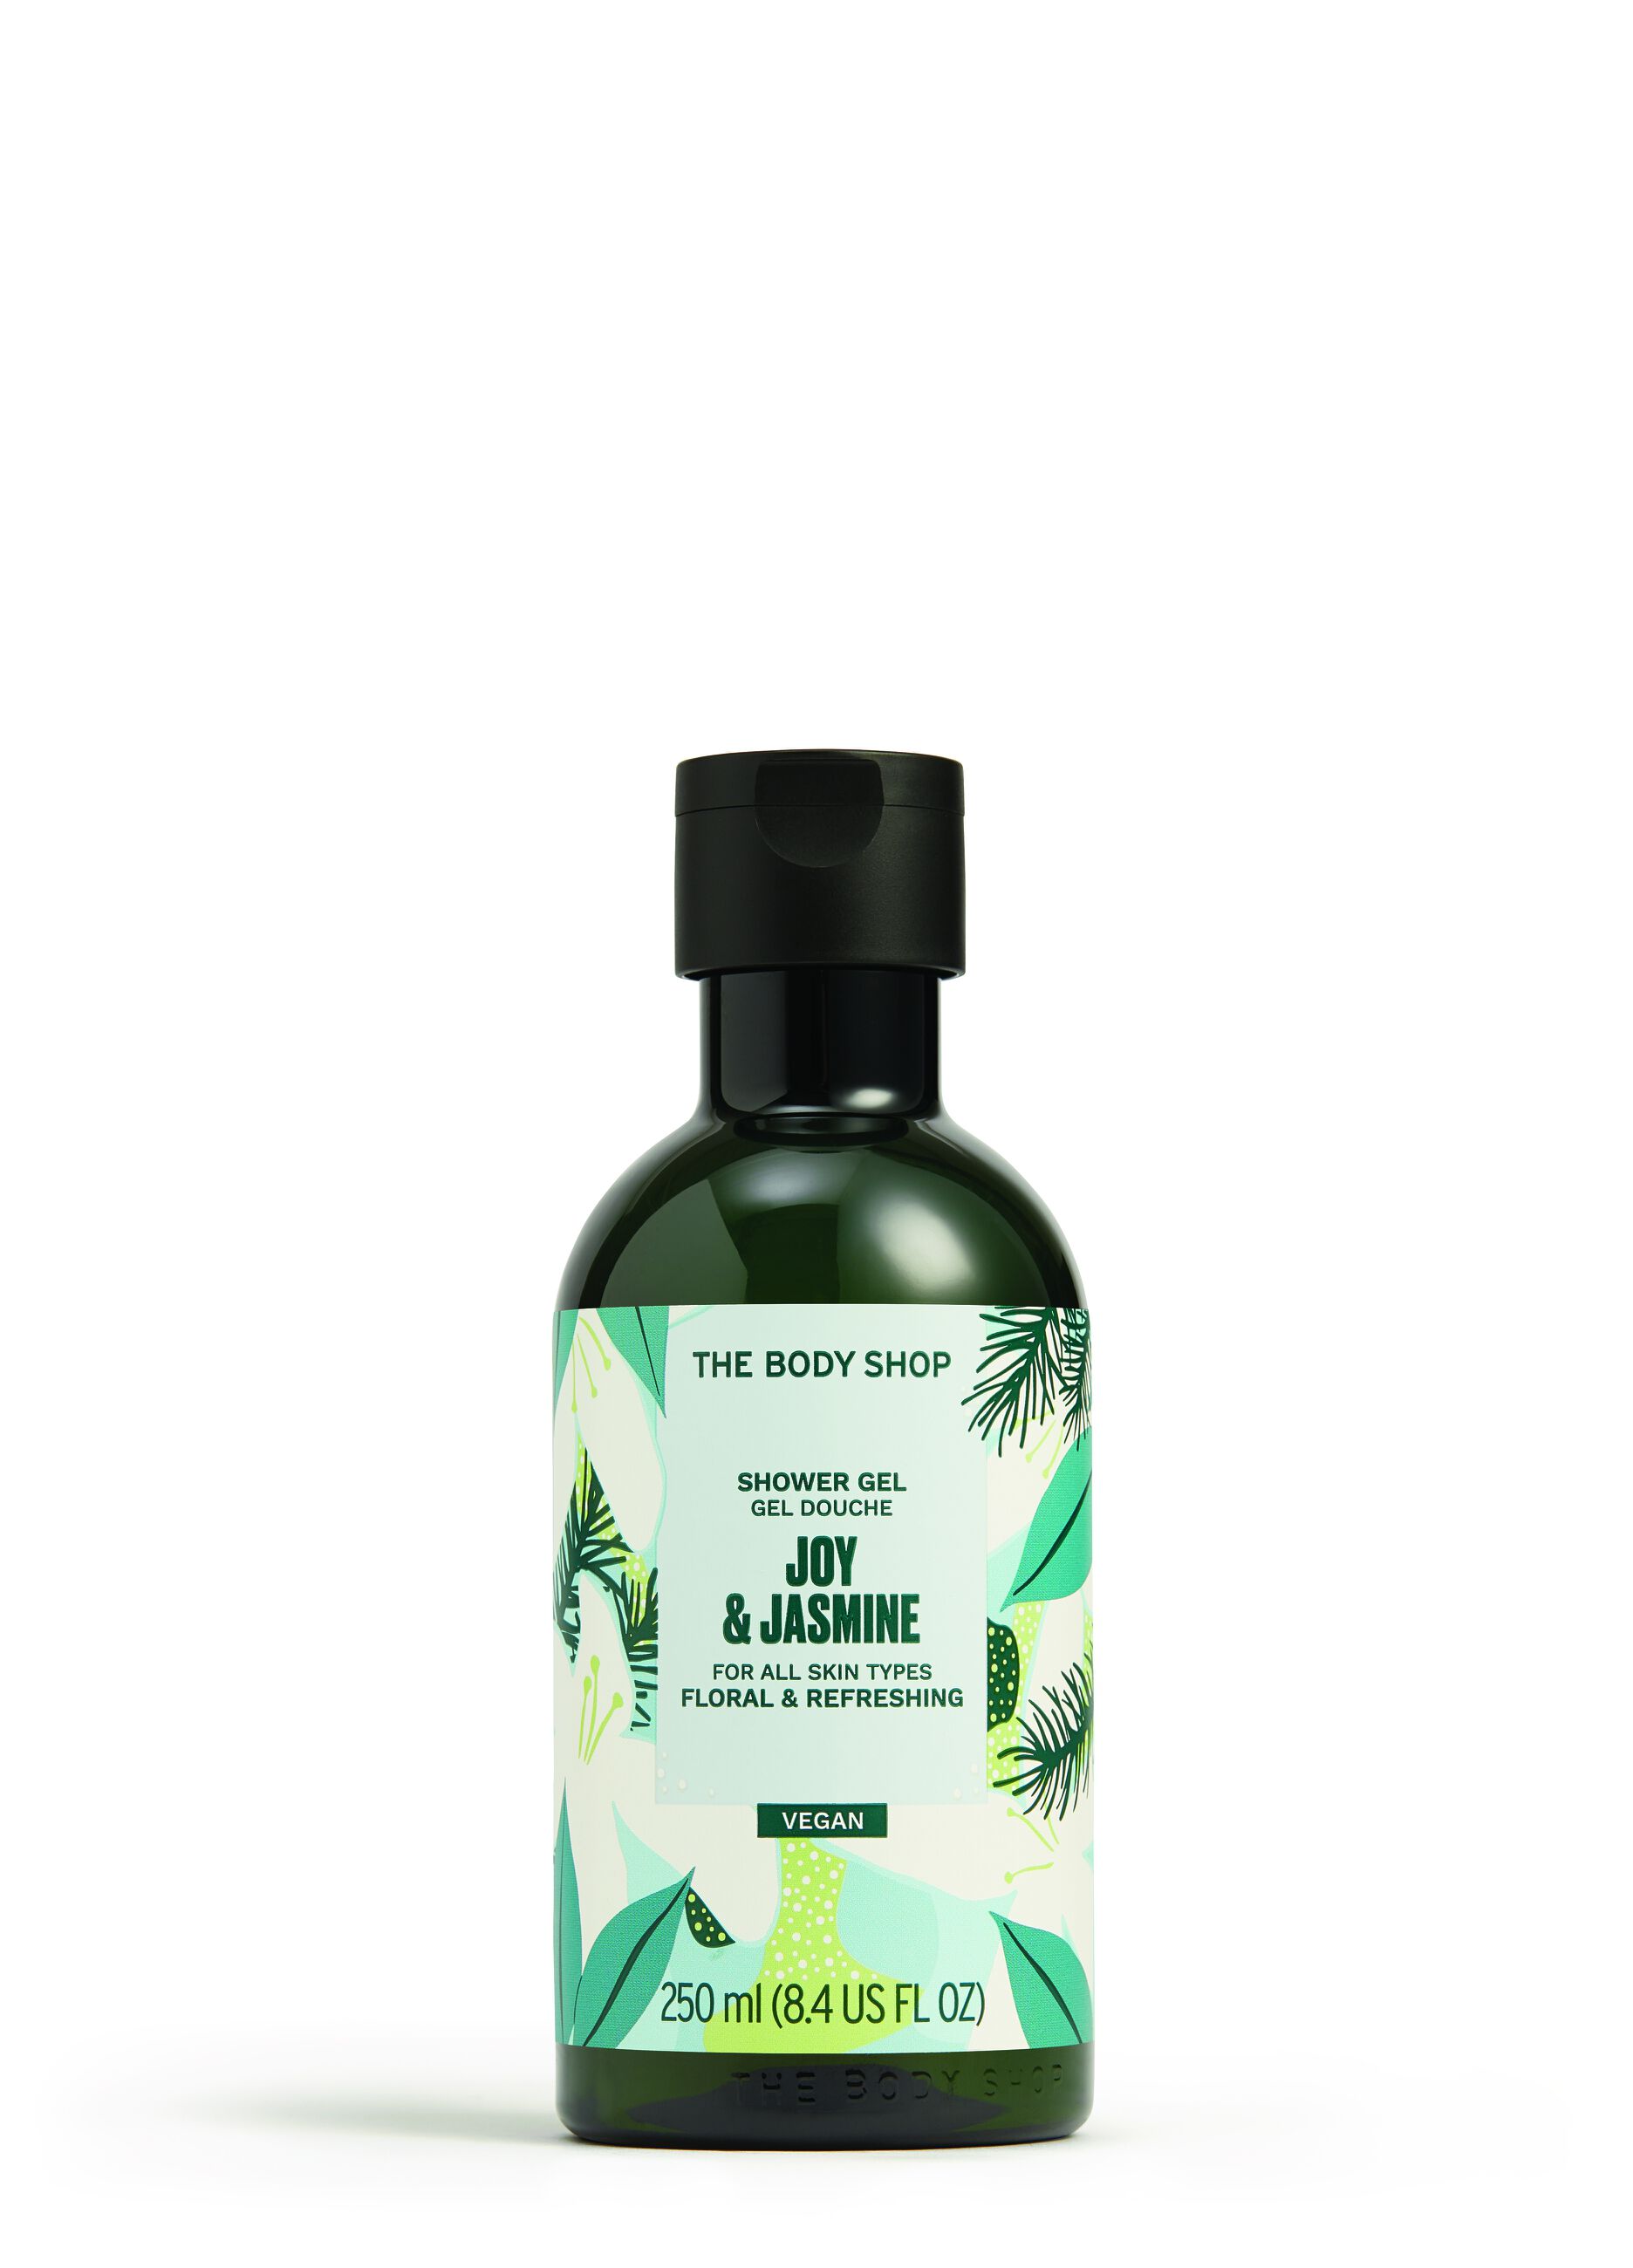 The Body Shop Joy & Jasmine shower gel 250ml